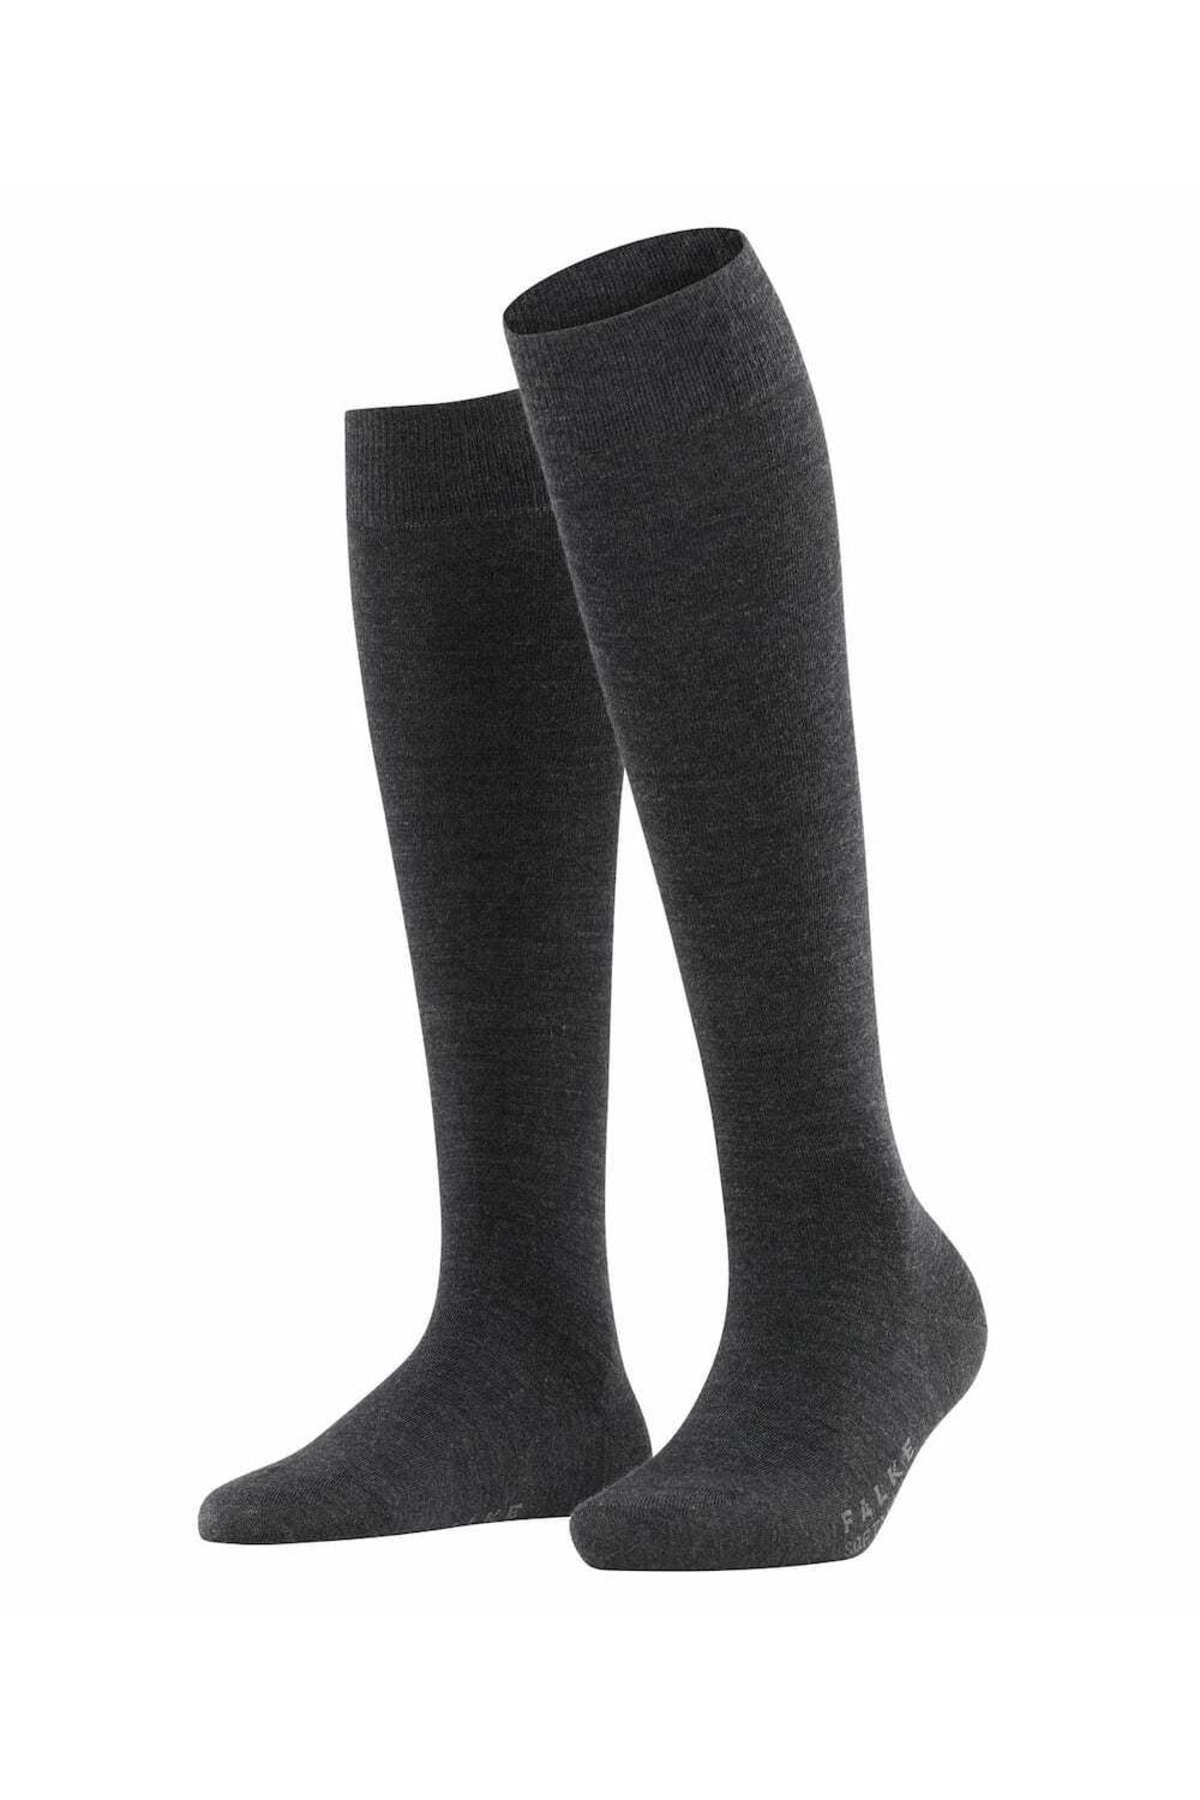 FALKE Socken Grau Elegant Fast ausverkauft